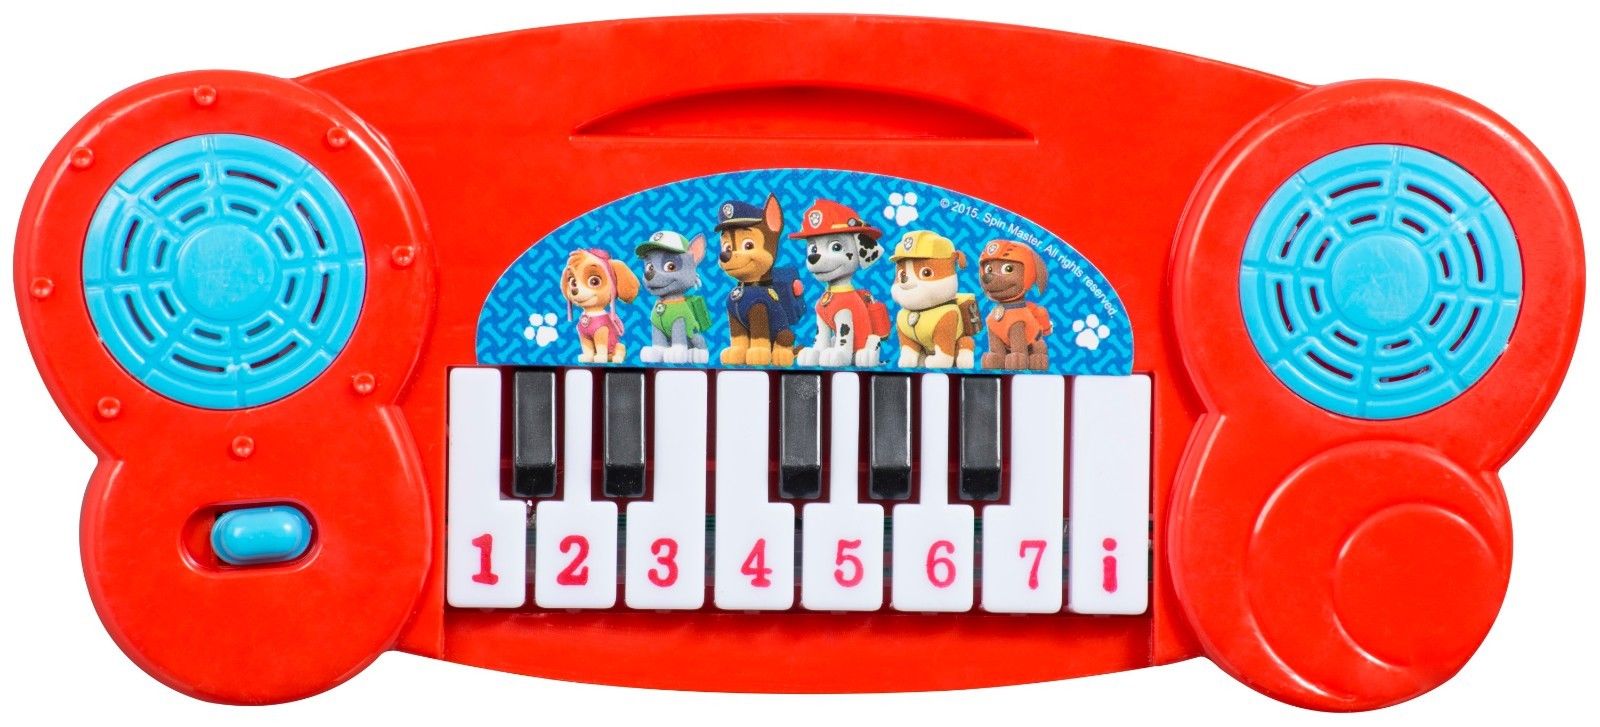 Wholesale PAW Patrol Mini Electronic Keyboard Piano | Value Character